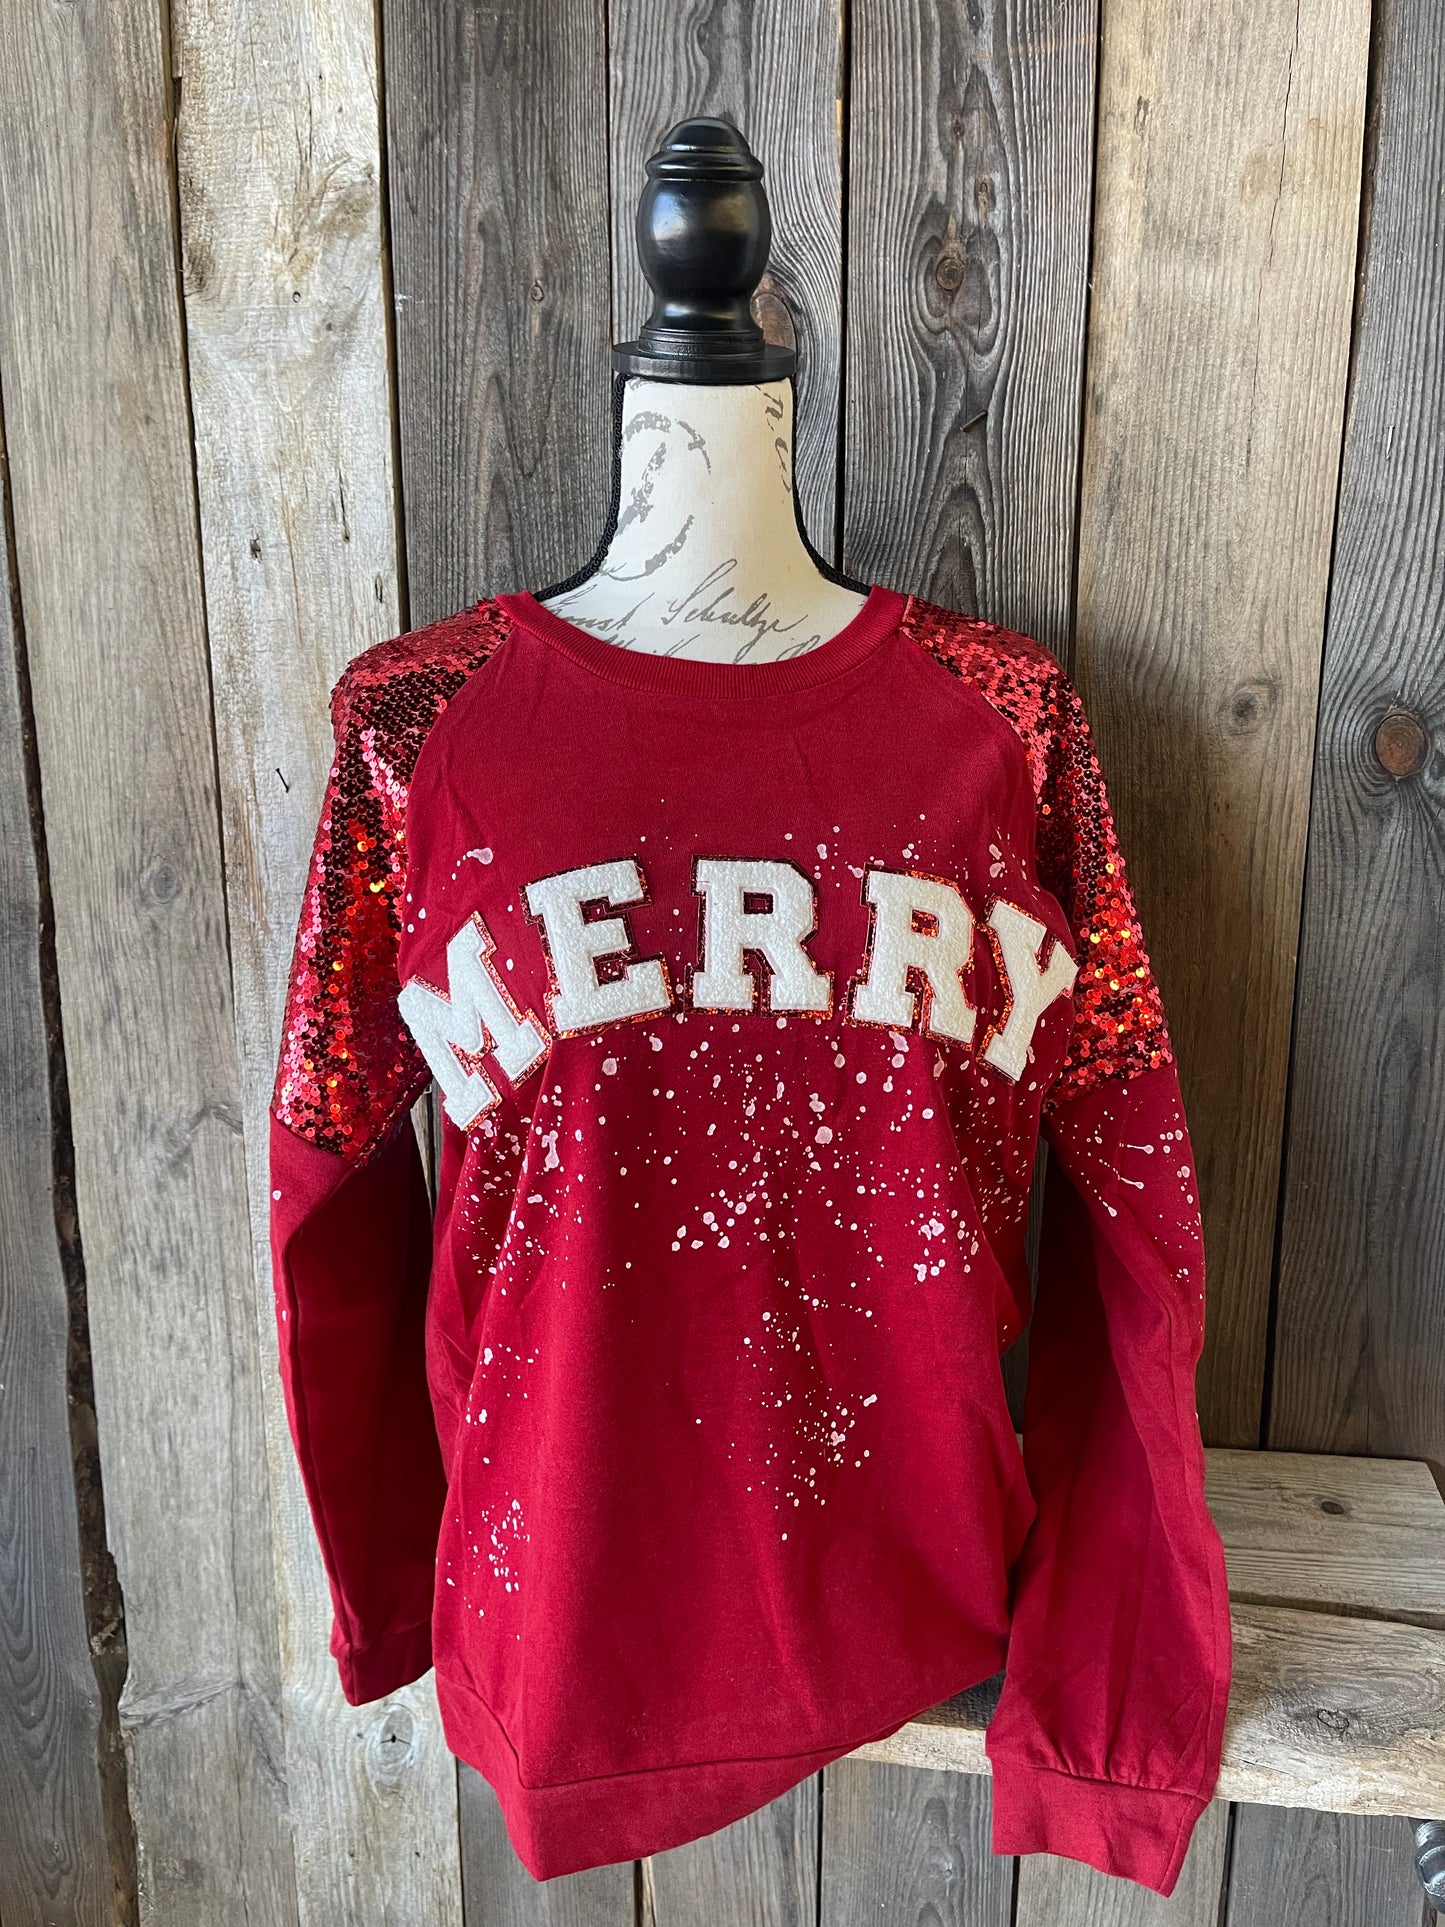 The Merry Sweatshirt